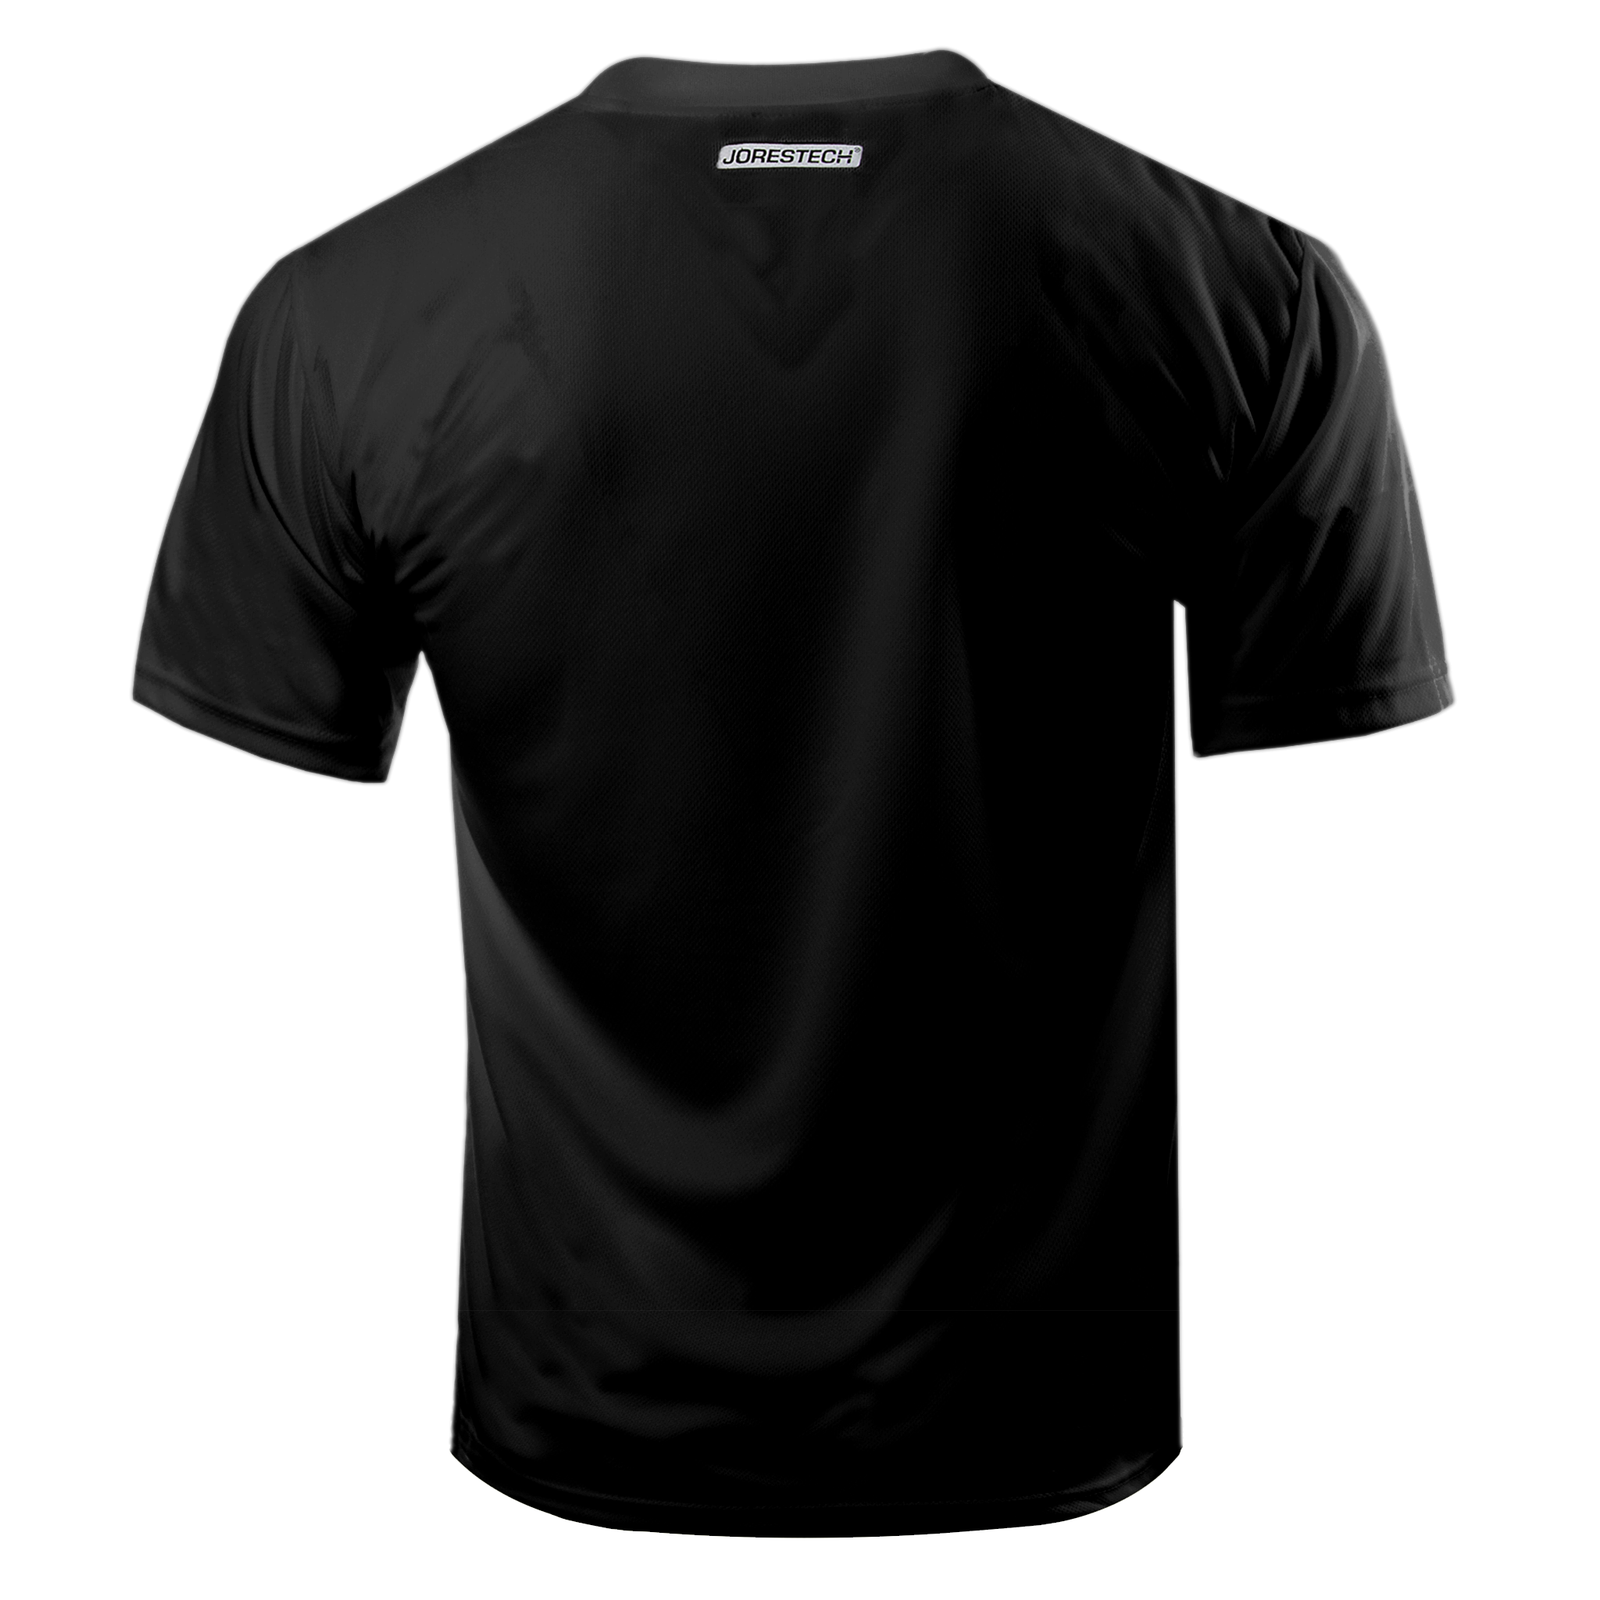 Short sleeve black breathable T shirt